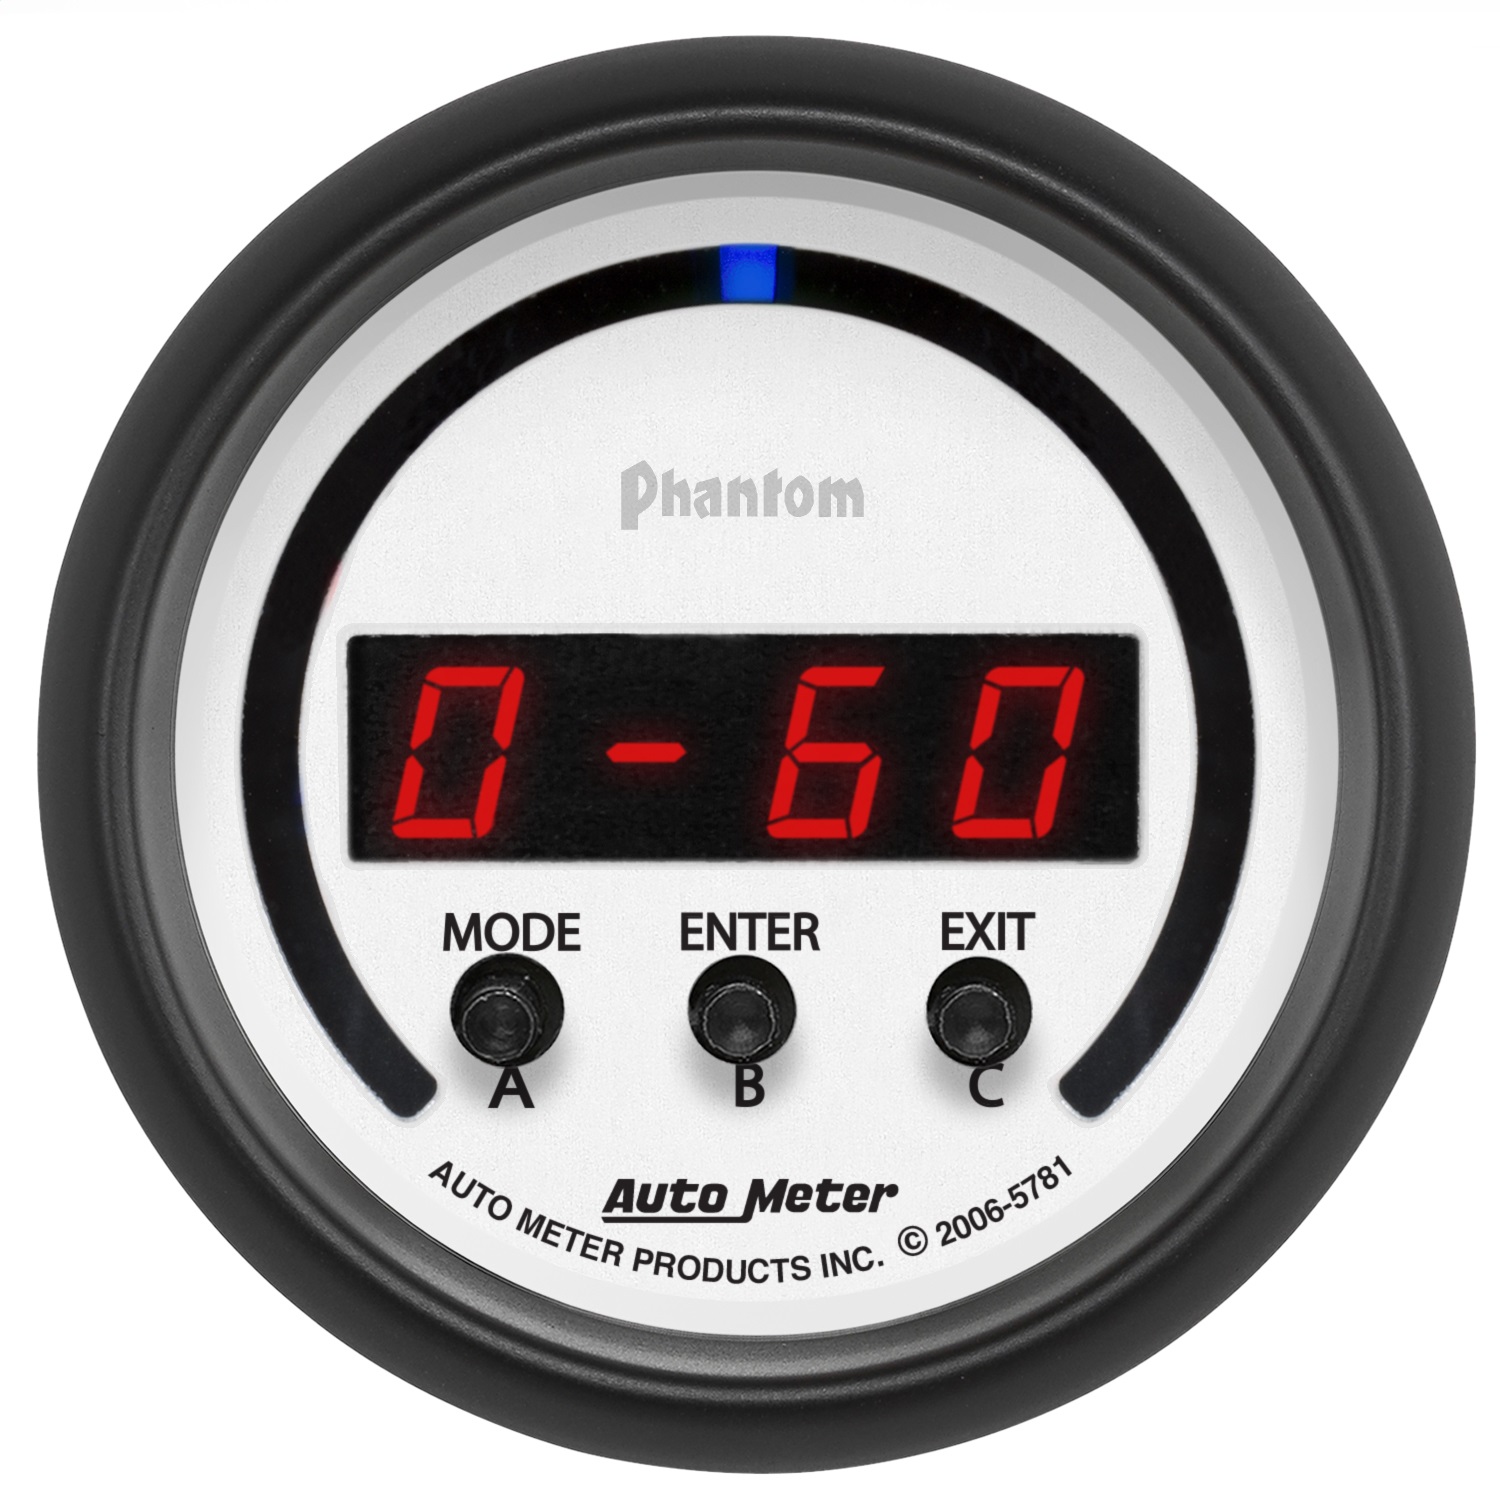 Auto Meter Auto Meter 5781 Phantom; Digital D-PIC; Gauge